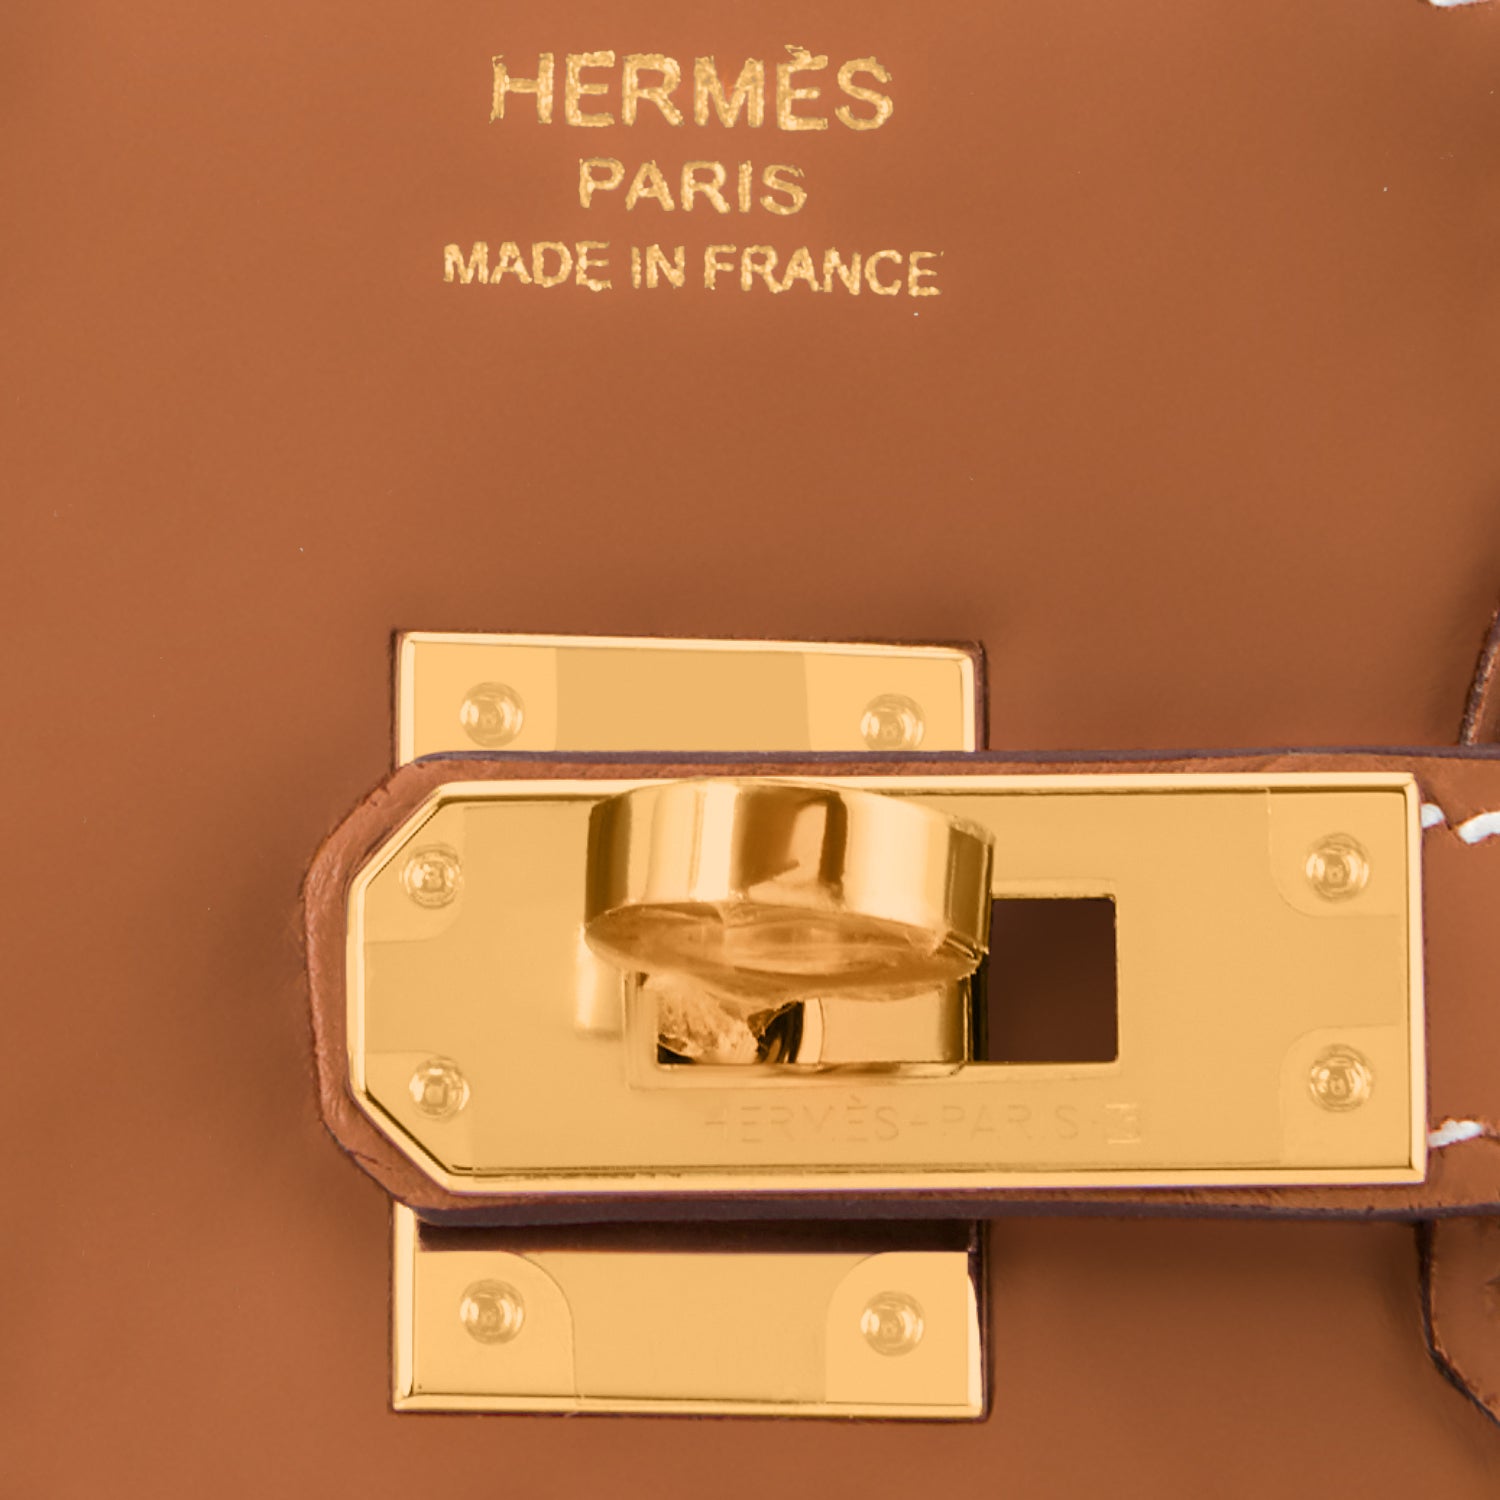 Hermès Birkin 25cm In Blue Brighton Swift Leather With Gold